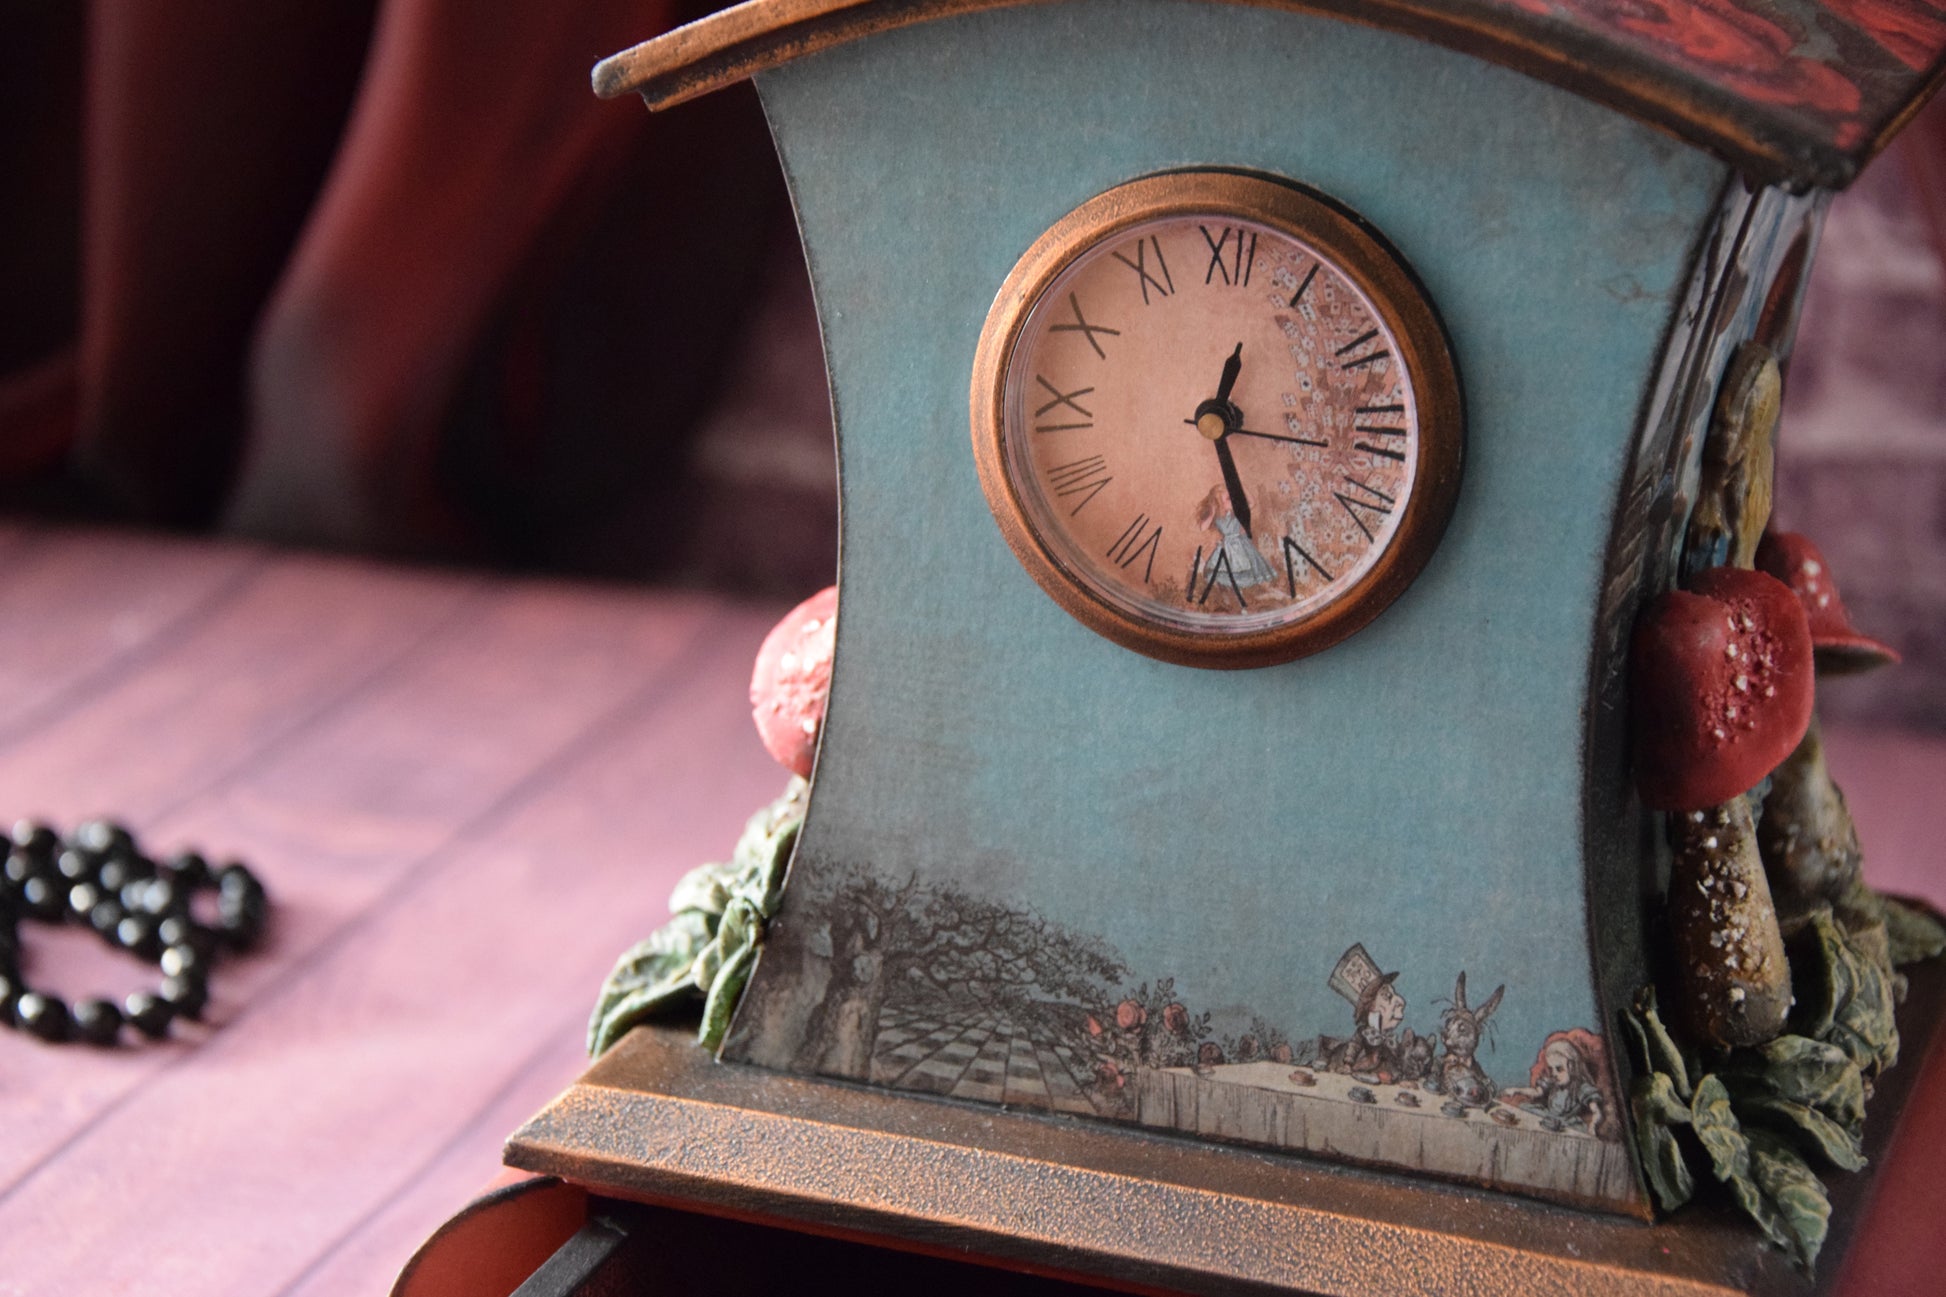 Alice in Wonderland Clock. Cheshire Cat Clock. Alice in Wonderland